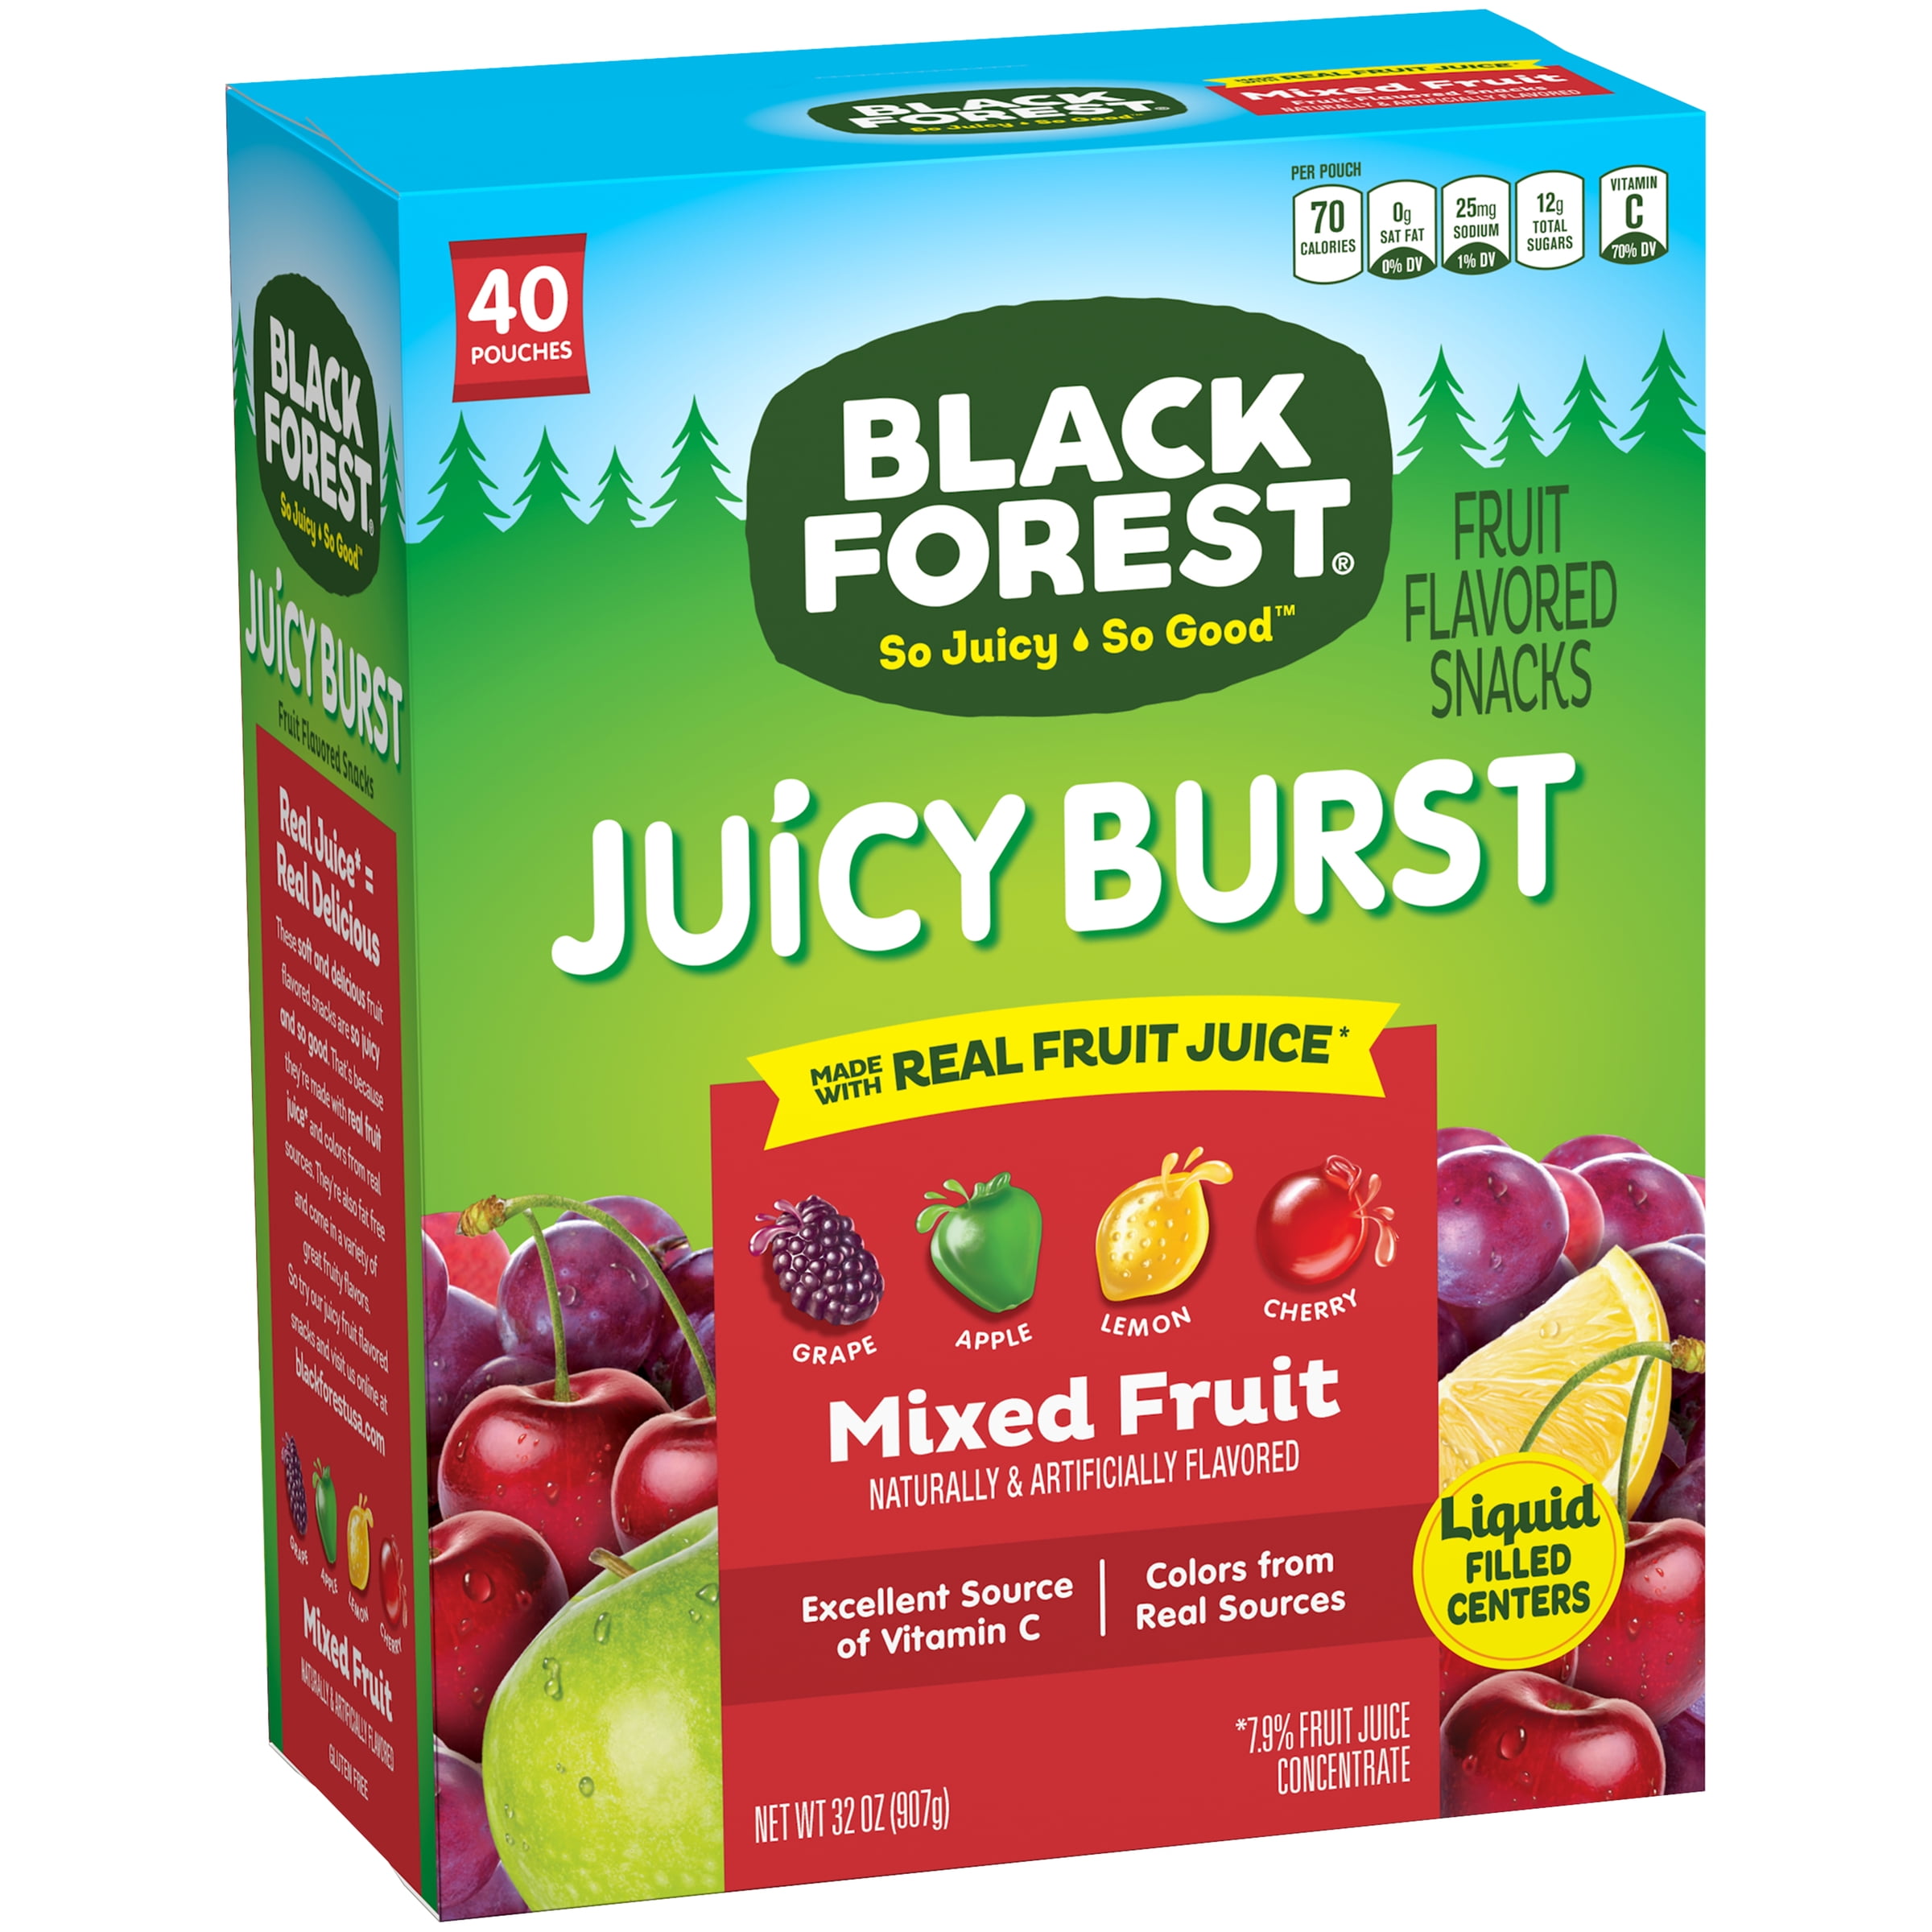 Black Forest Fruit Flavored Snacks Juicy Burst, Mixed Fruit, 32 oz Box, 40 Ct